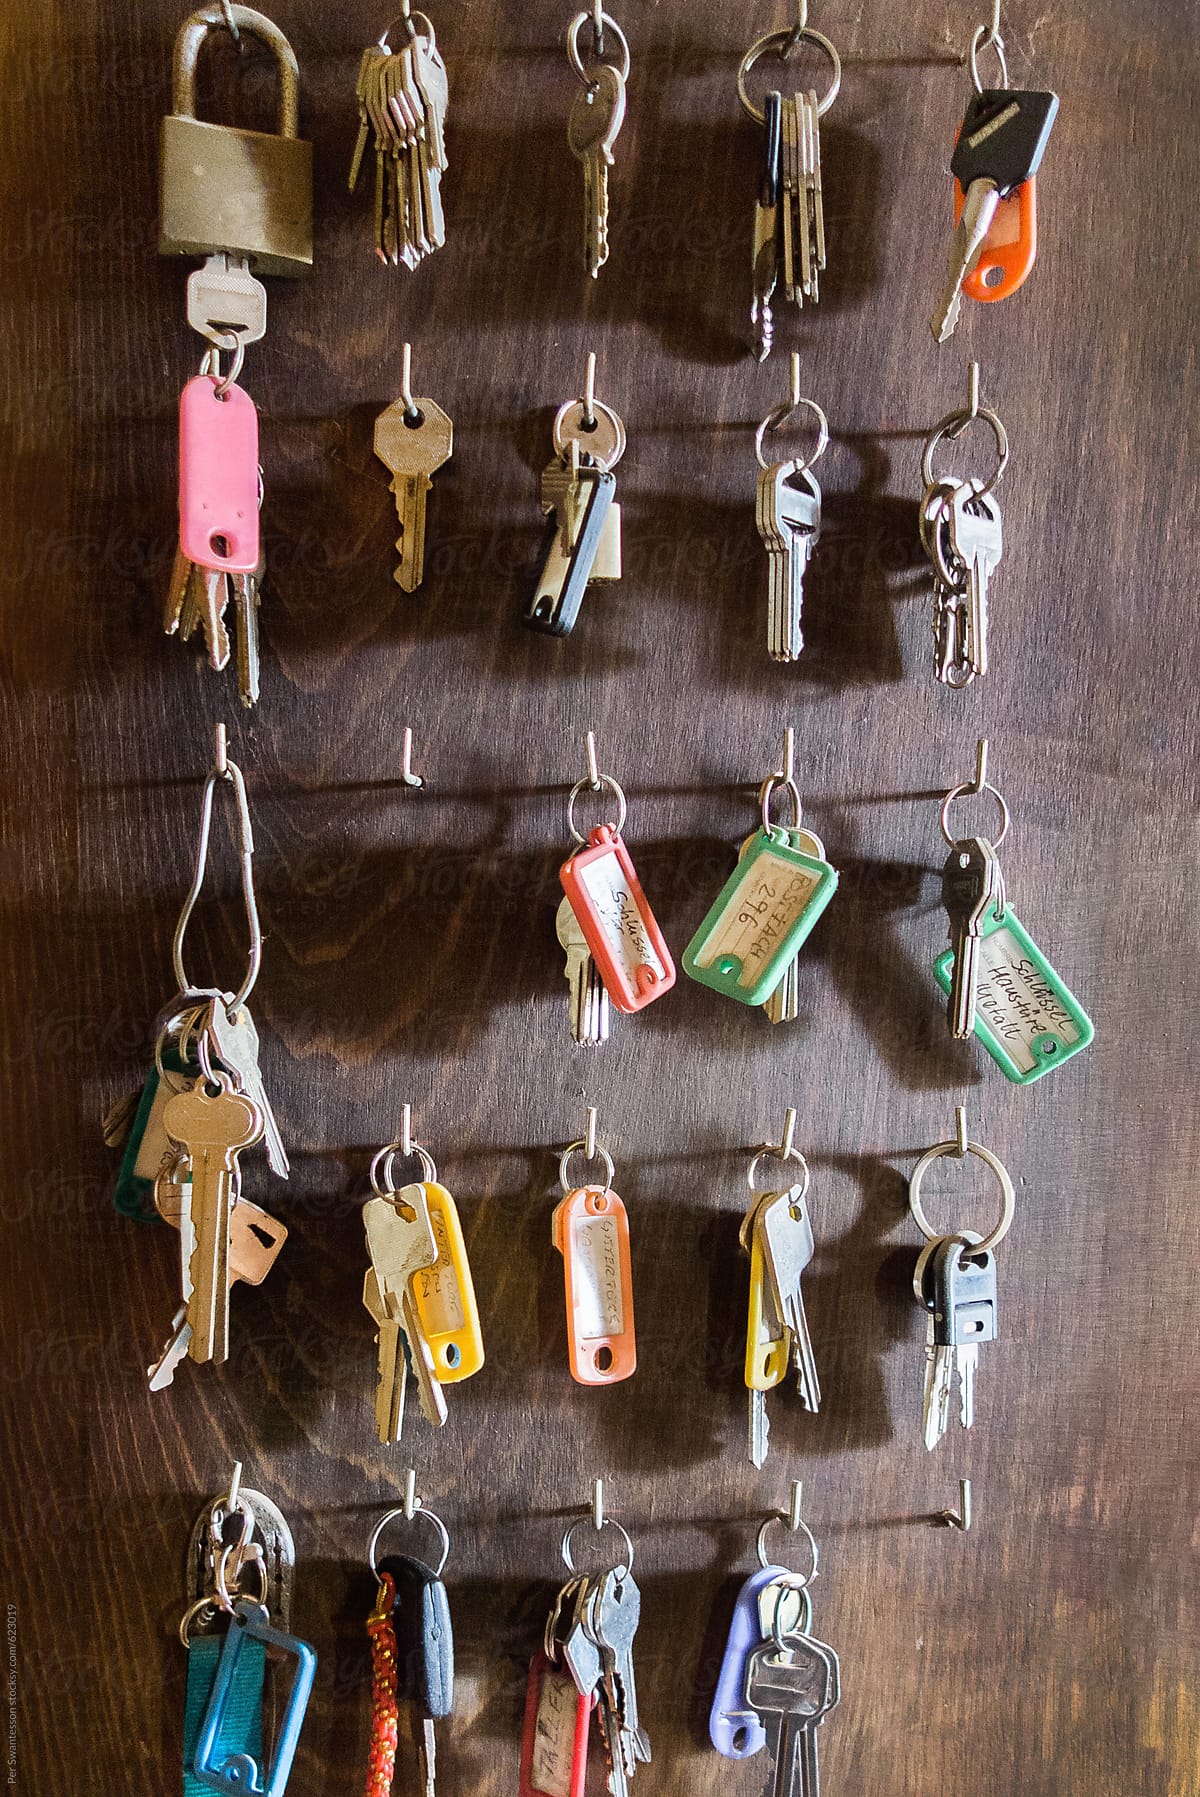 Key security: Lock keys